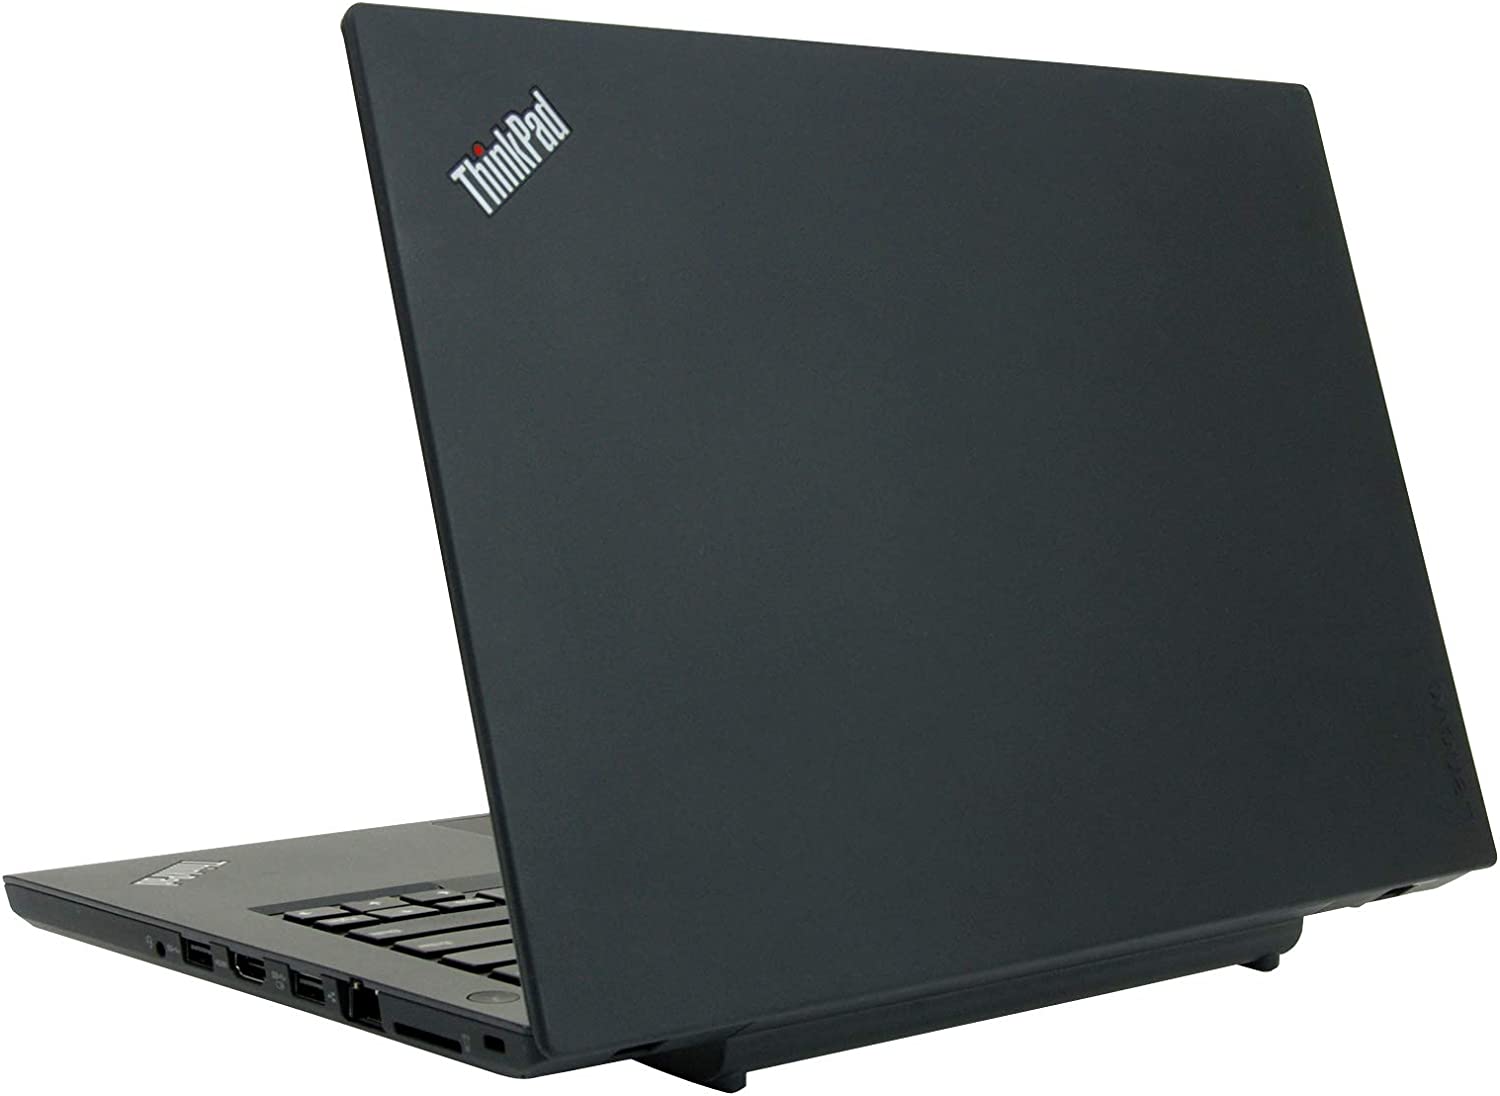 Lenovo ThinkPad T470 Renewed Business Laptop | intel CORE I7-6600U 2.60GHZ CPU | 14.1 inch Display | Windows 10 Professional - Renewed